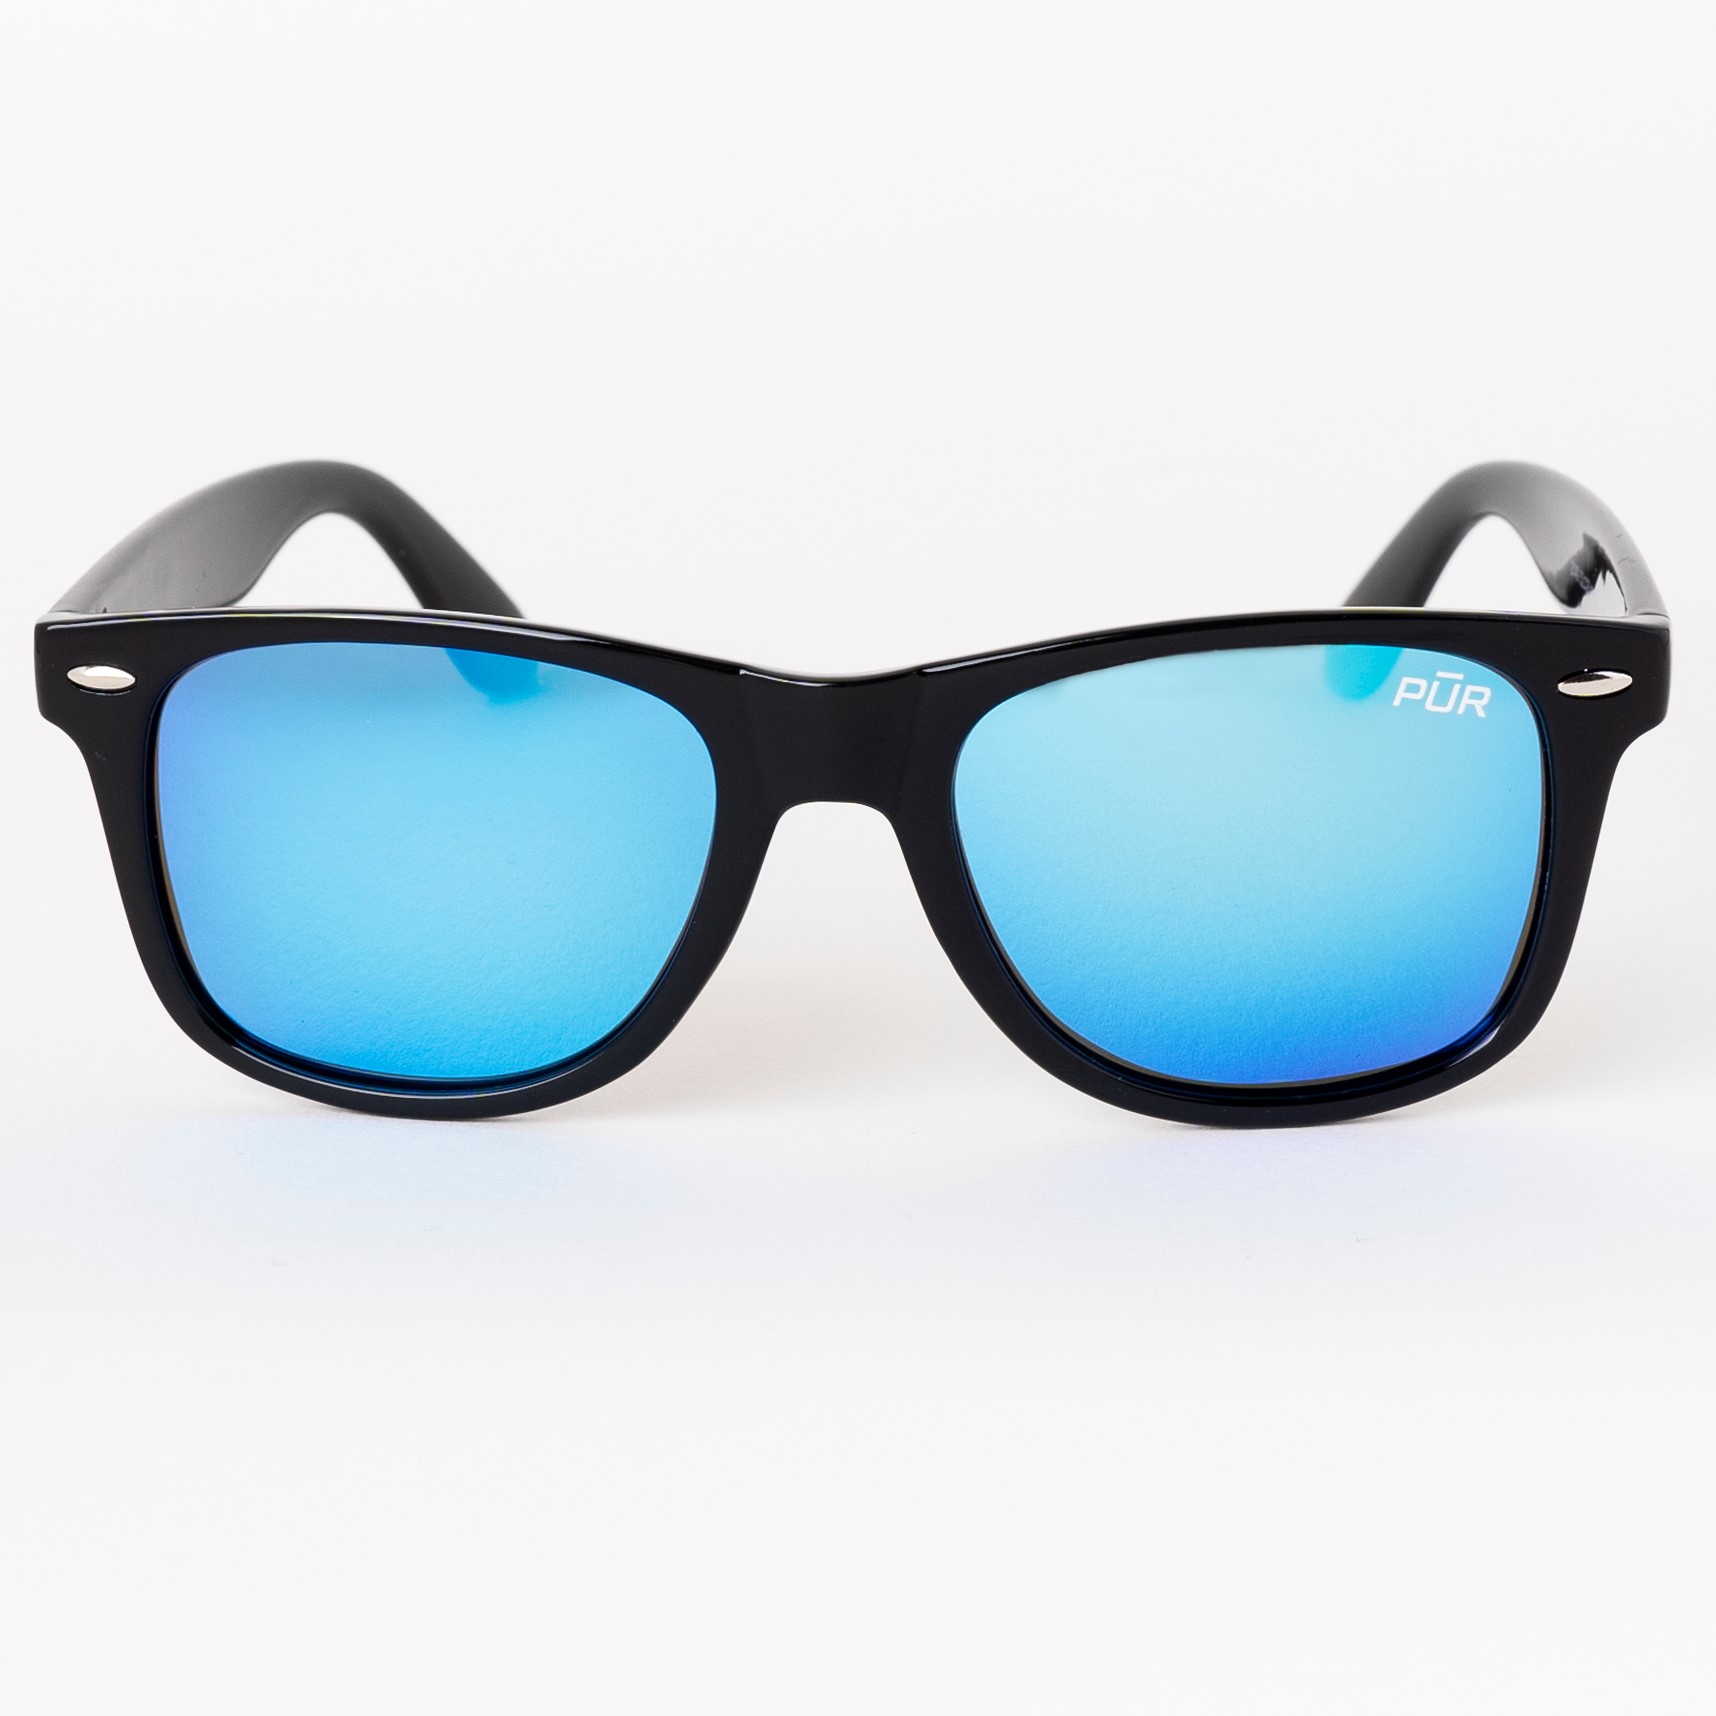 Eyewearlabs l Unisex Polarized Wayfarer Sunglasses For Driving Sports and  Adventure l Blue Lens l 100% UV Protected l Medium l Durand Blue